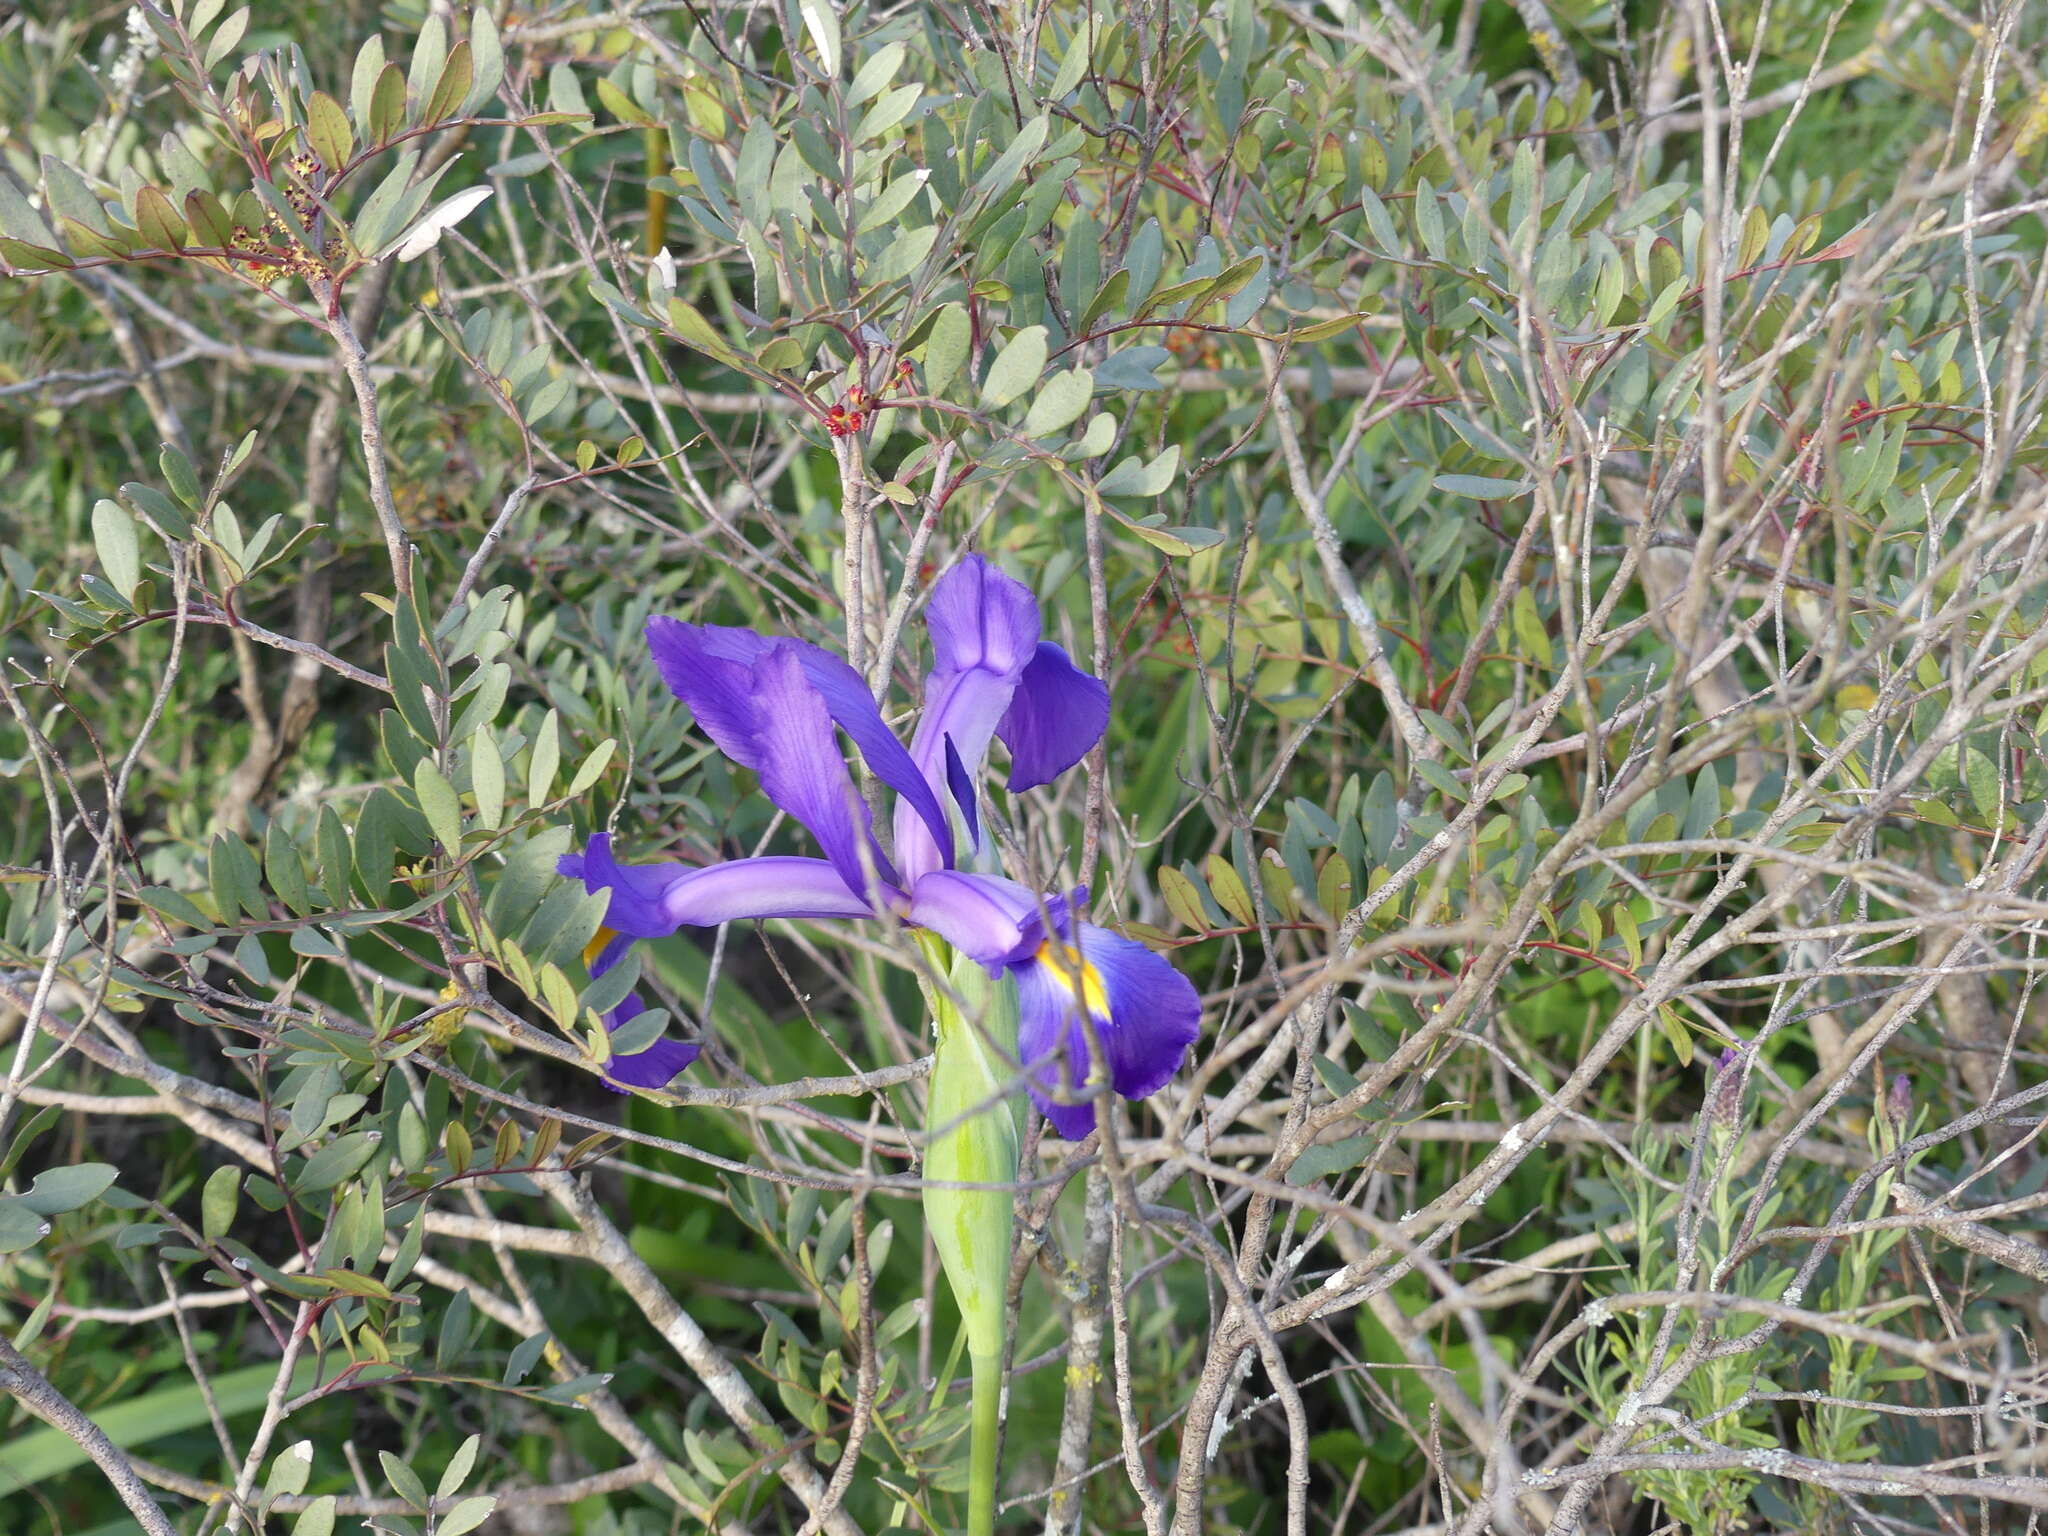 Sivun Iris tingitana Boiss. & Reut. kuva